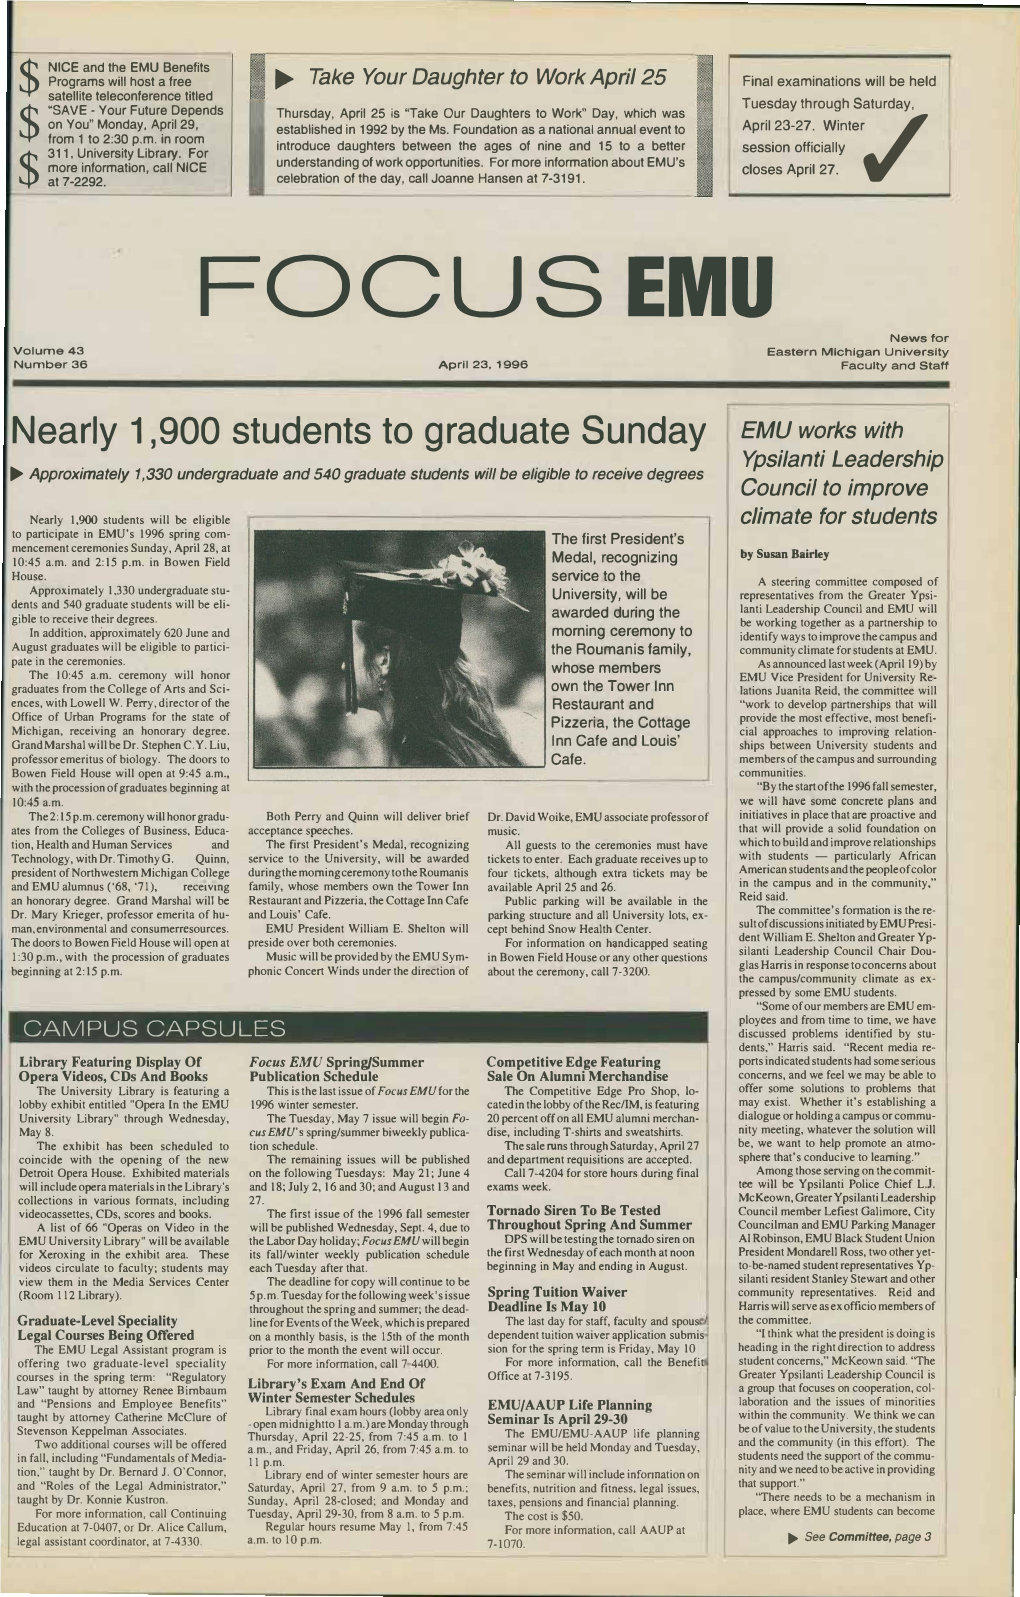 Focus EMU, April 23, 1996